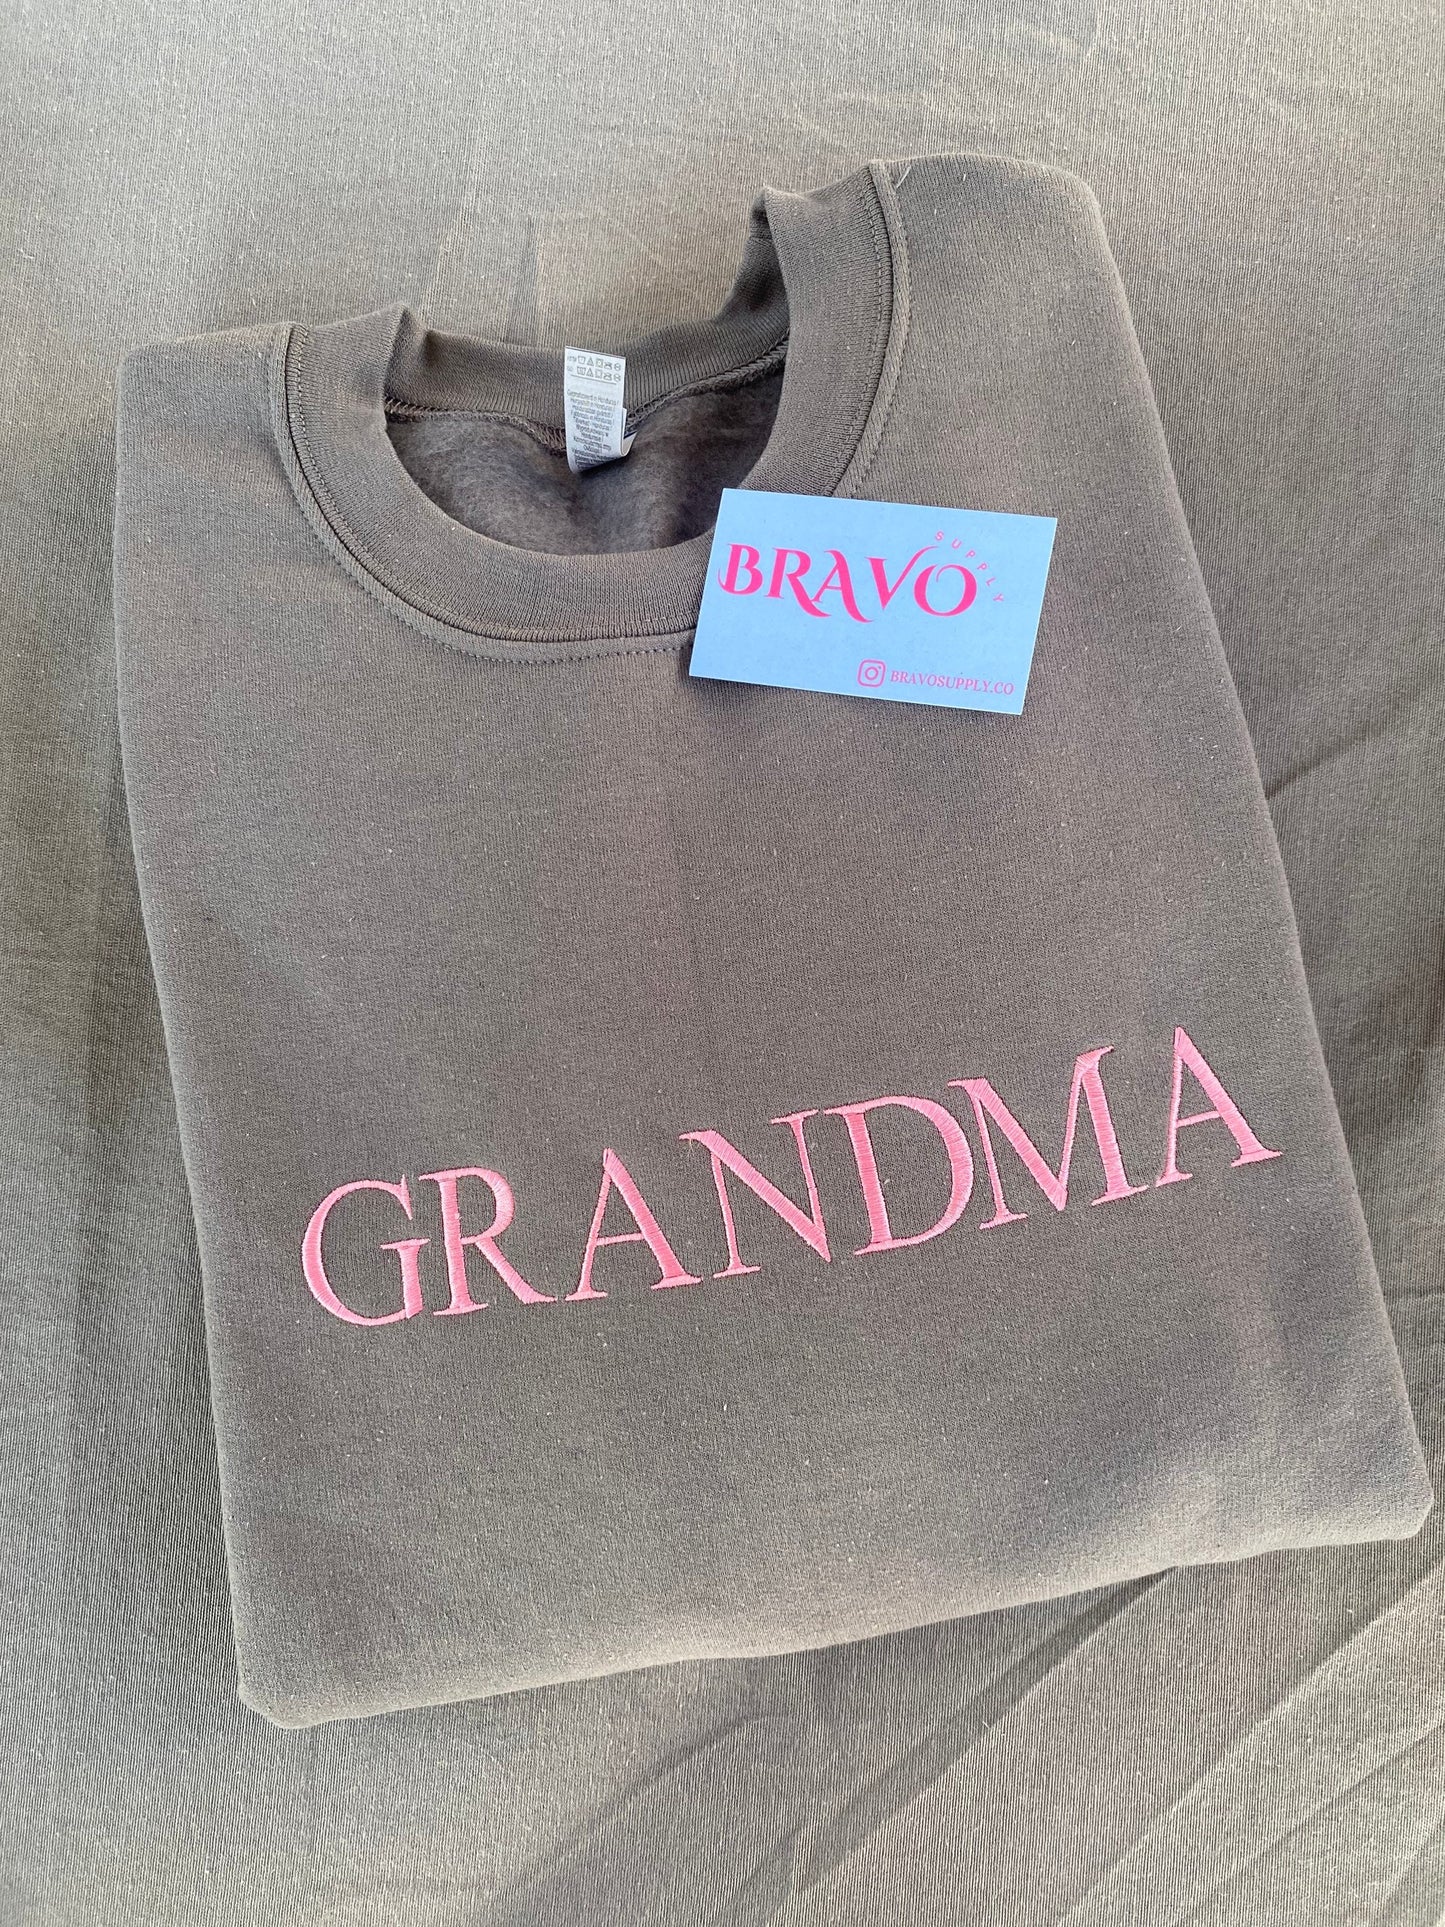 Grandma embroidered sweatshirt